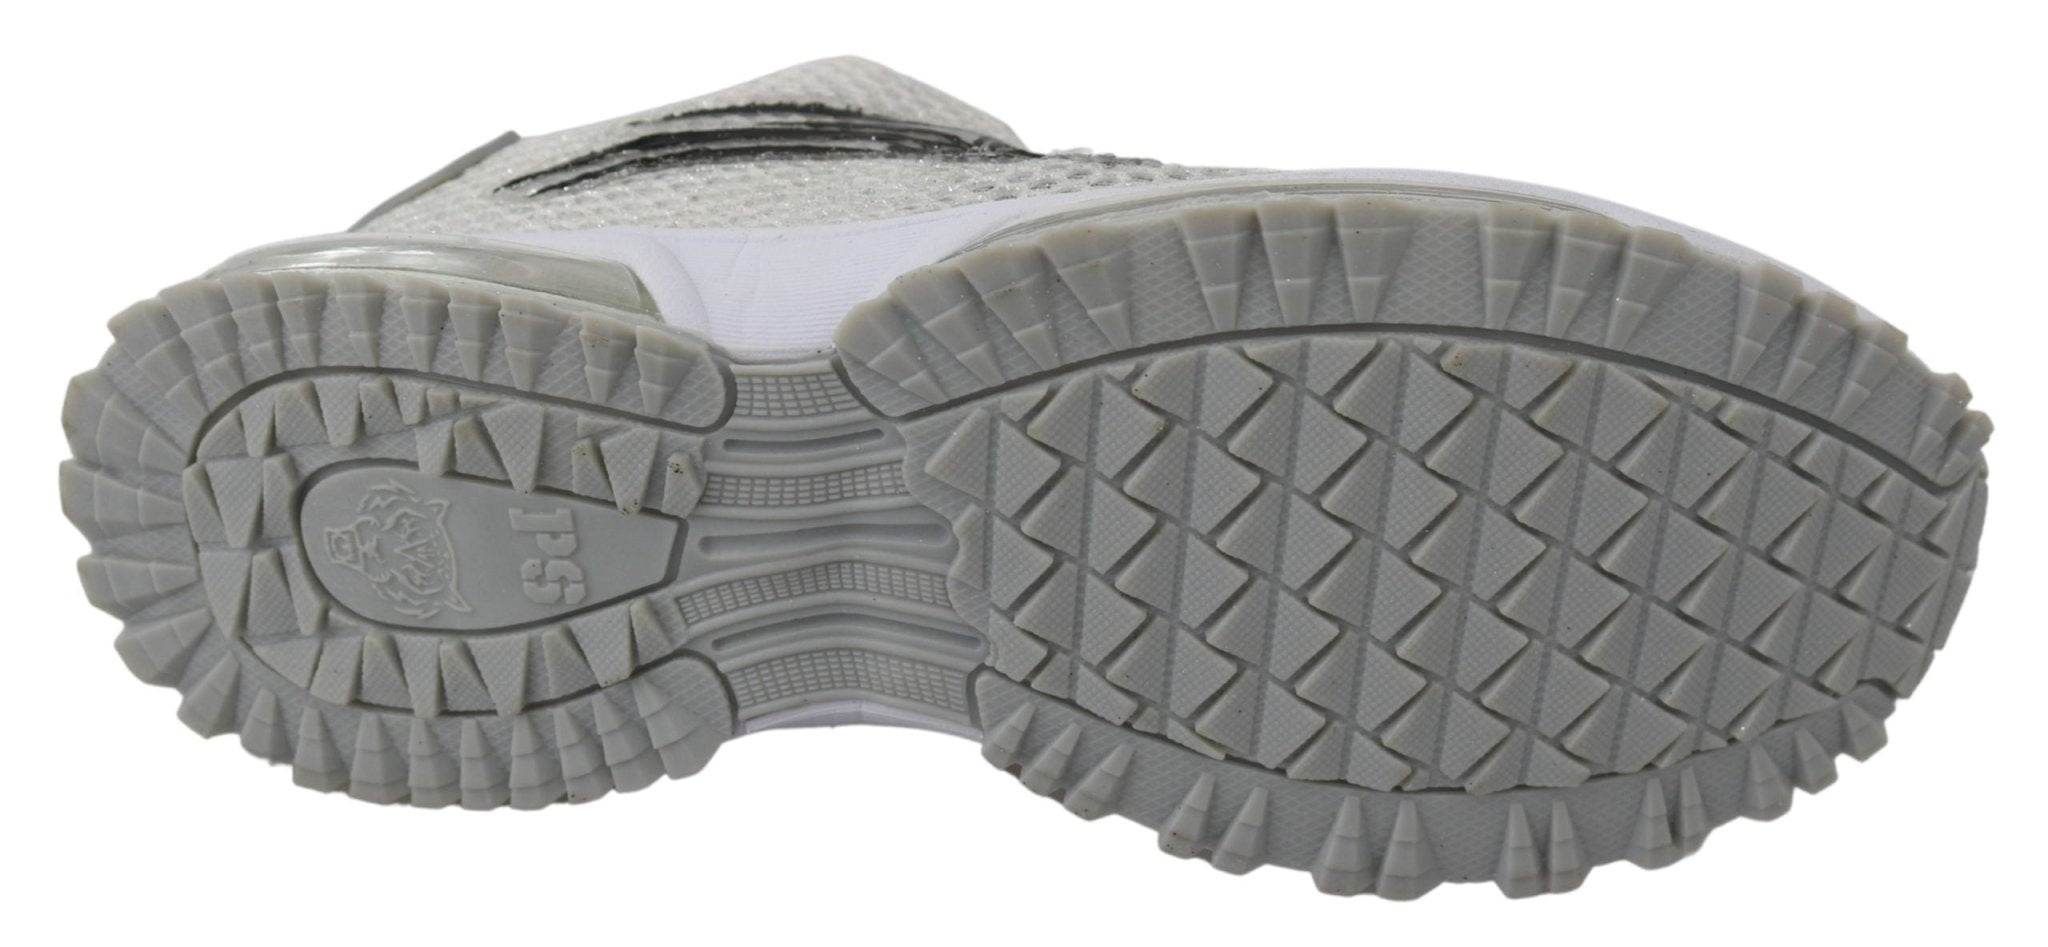 Plein Sport Silver Polyester Gretel Sneakers Shoes - Fizigo